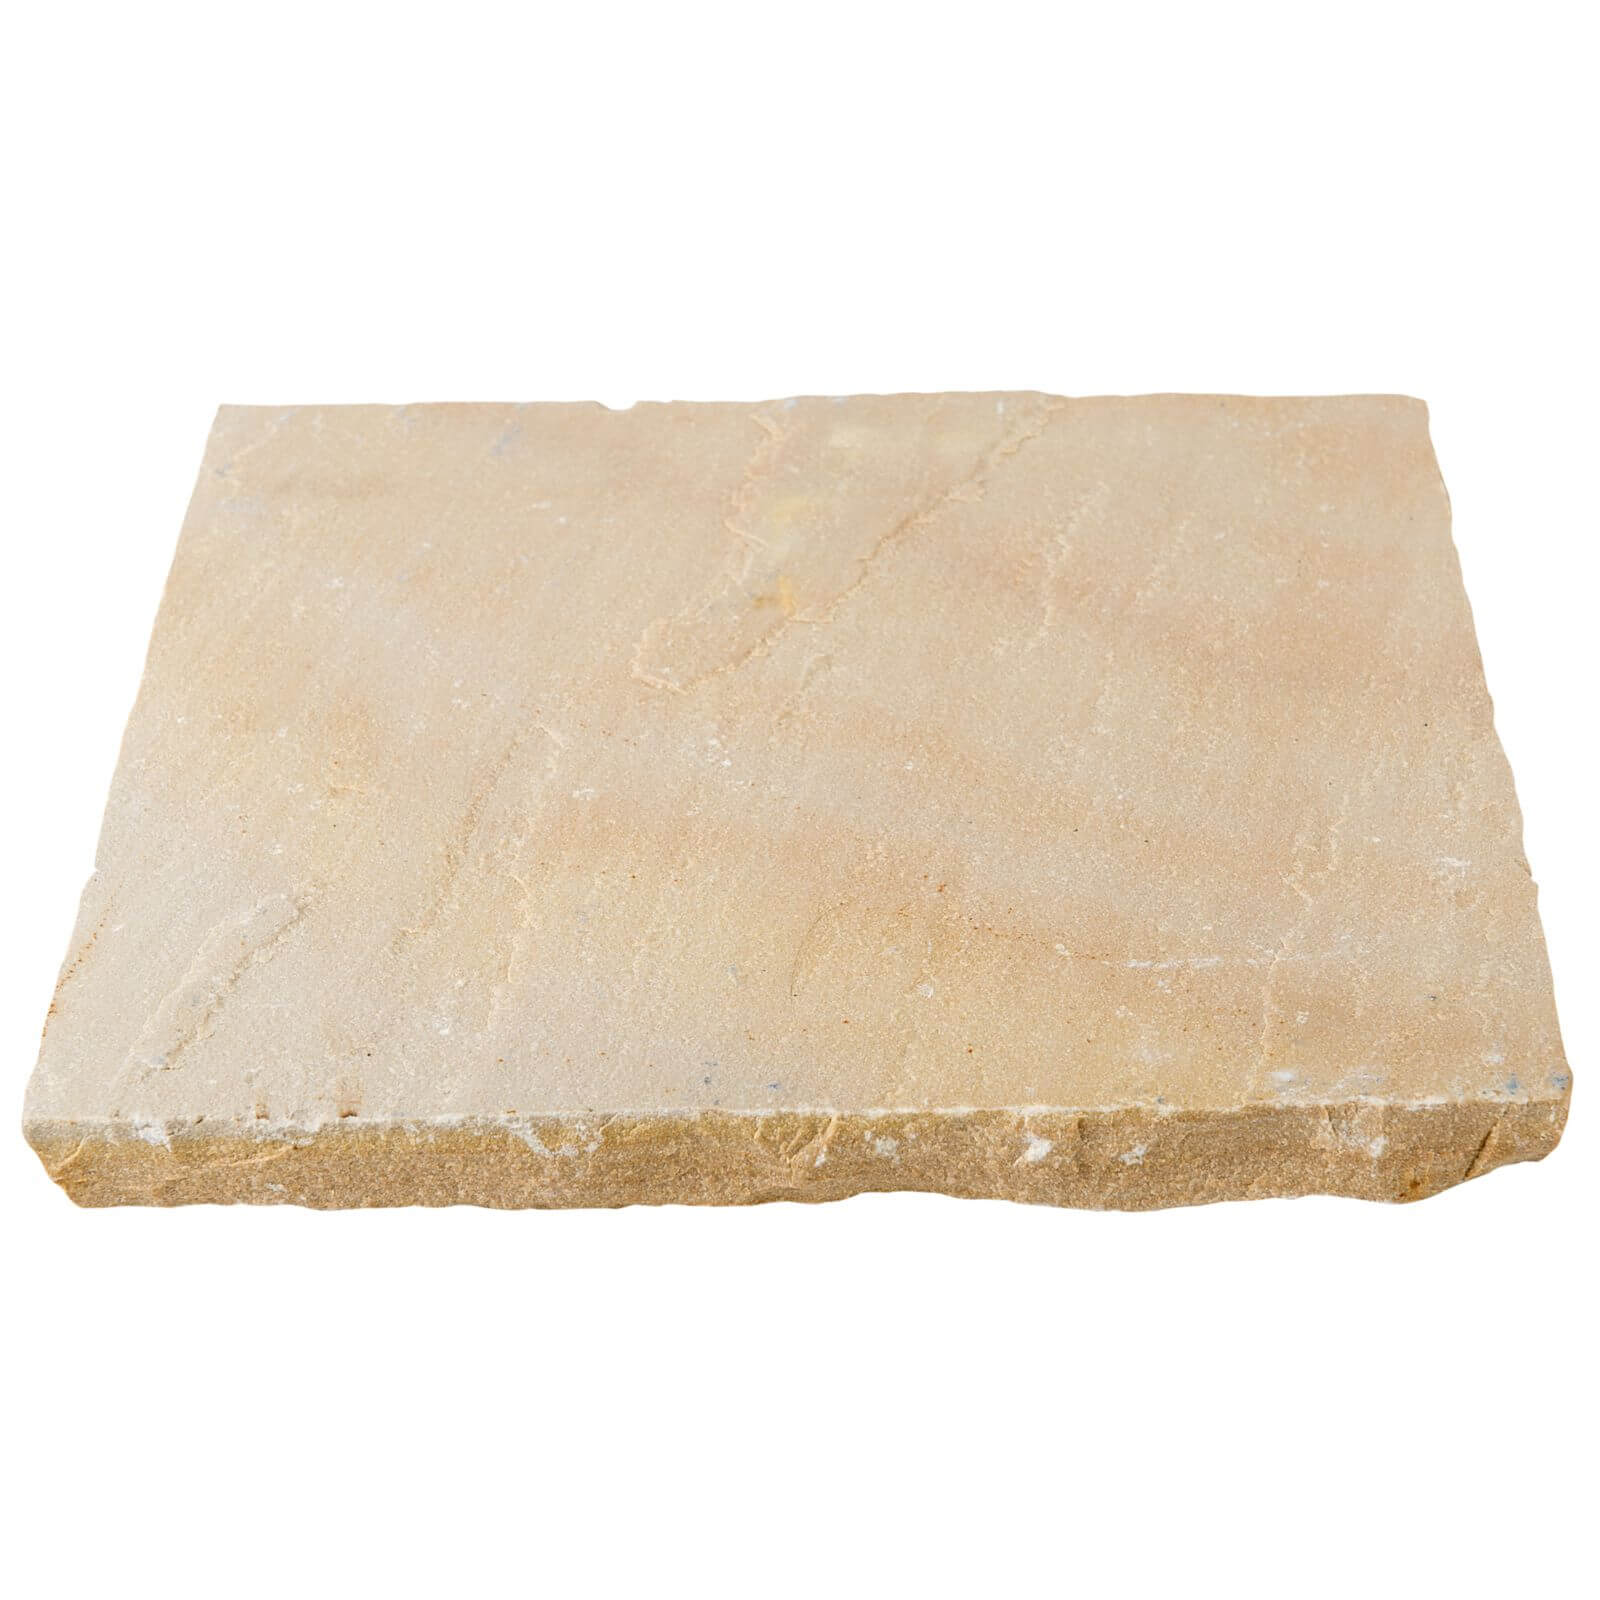 Stylish Stone Natural Sandstone 290 x 290mm - Scottish Glen